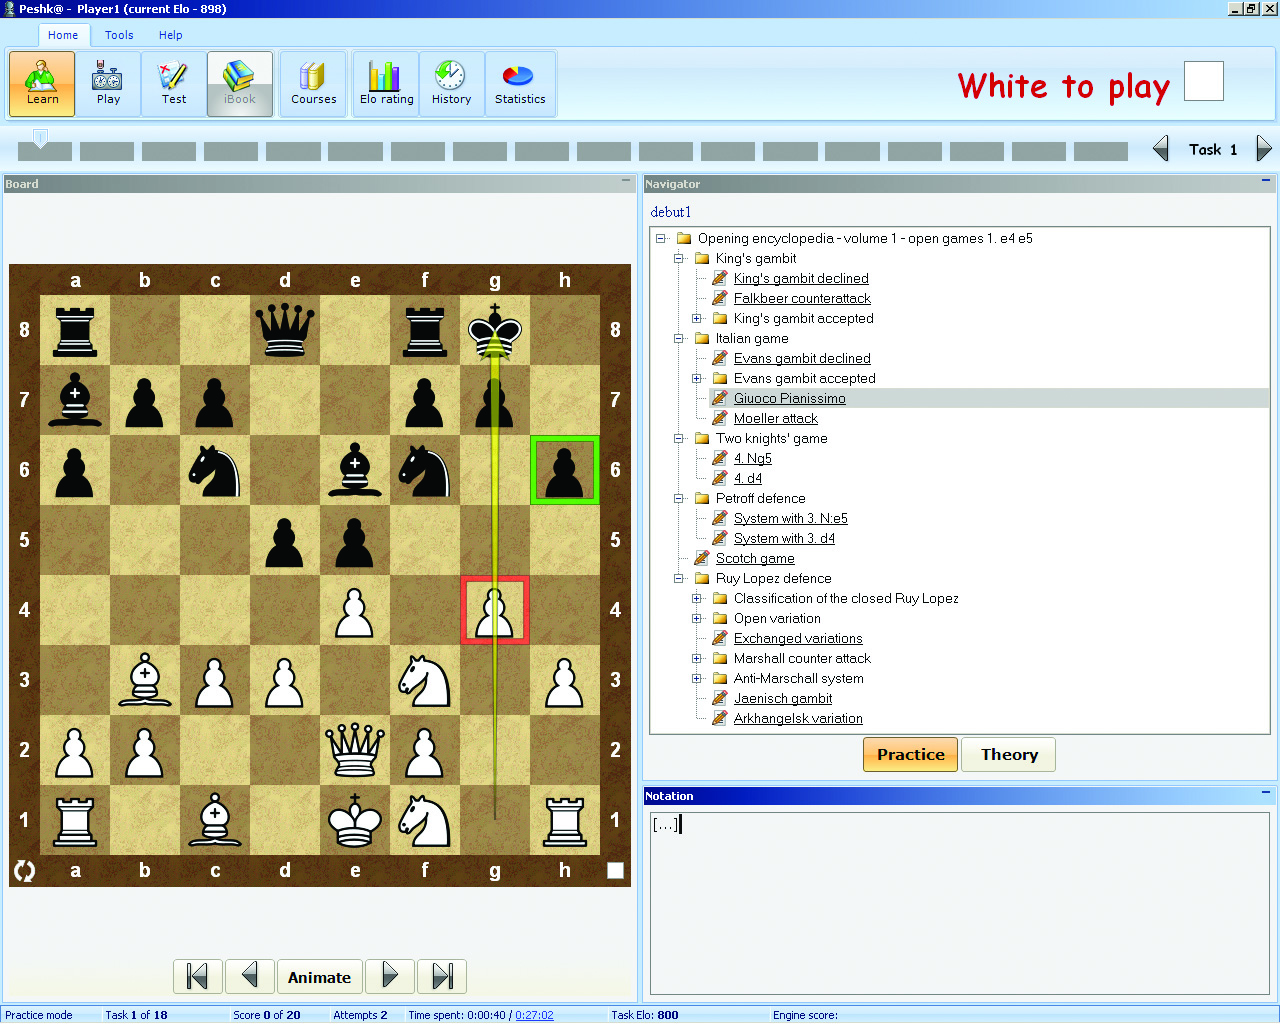 Modern Chess Opening 3: Sicilian Defense (1.e4 c5) (download)